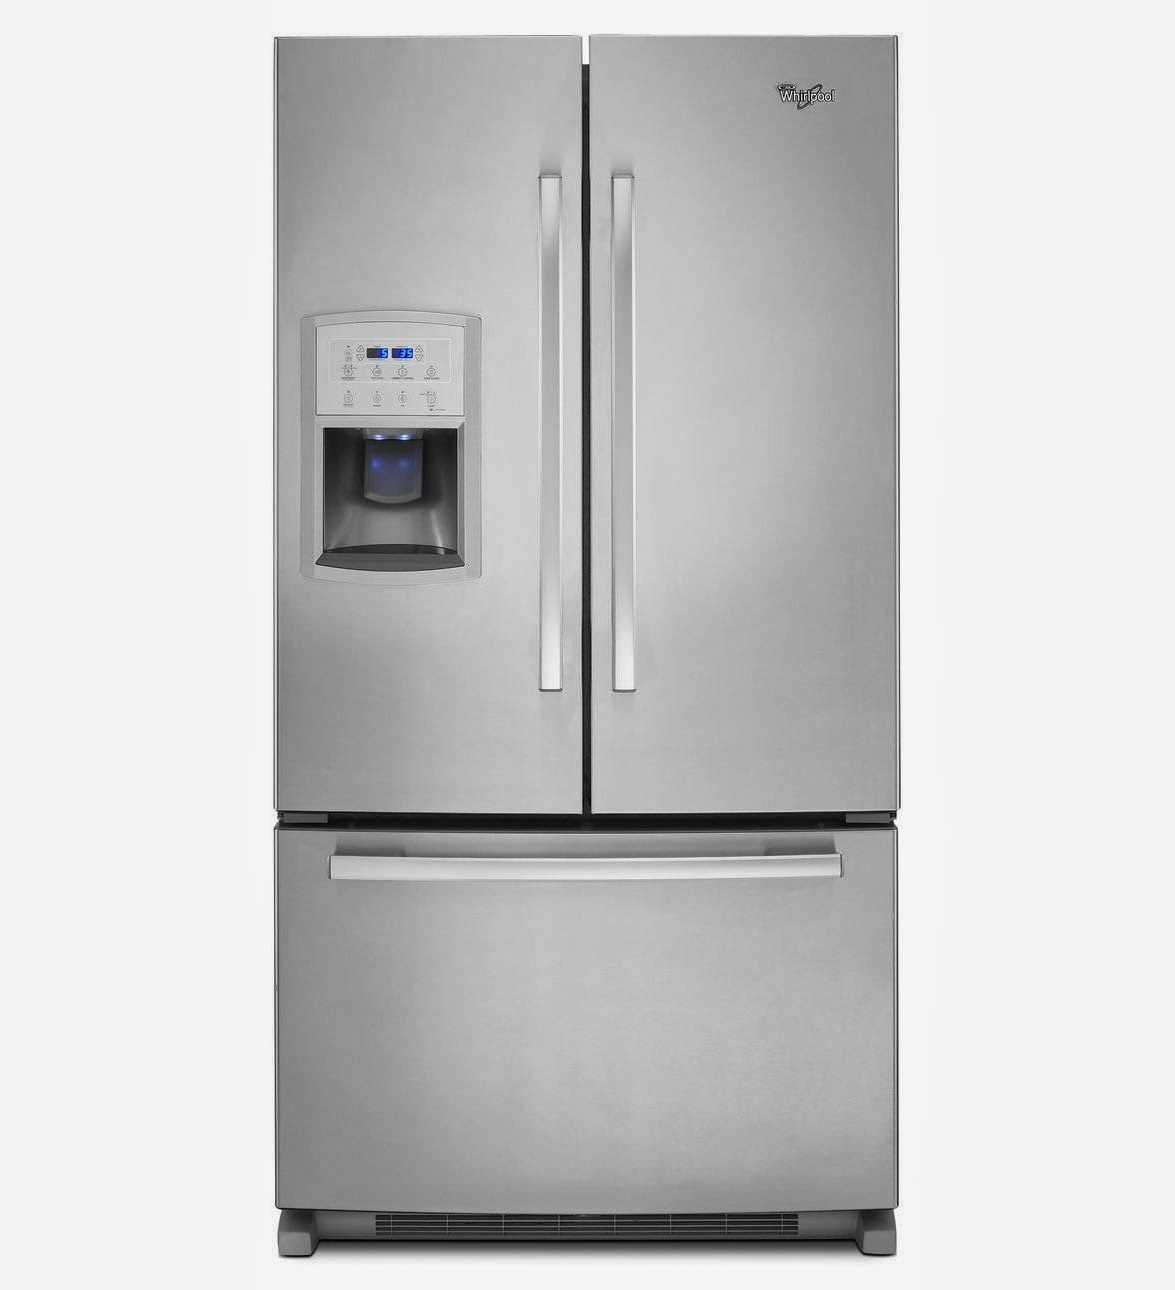 Whirlpool Refrigerator Brand: Whirlpool GI0FSAXVY Gold Refrigerator